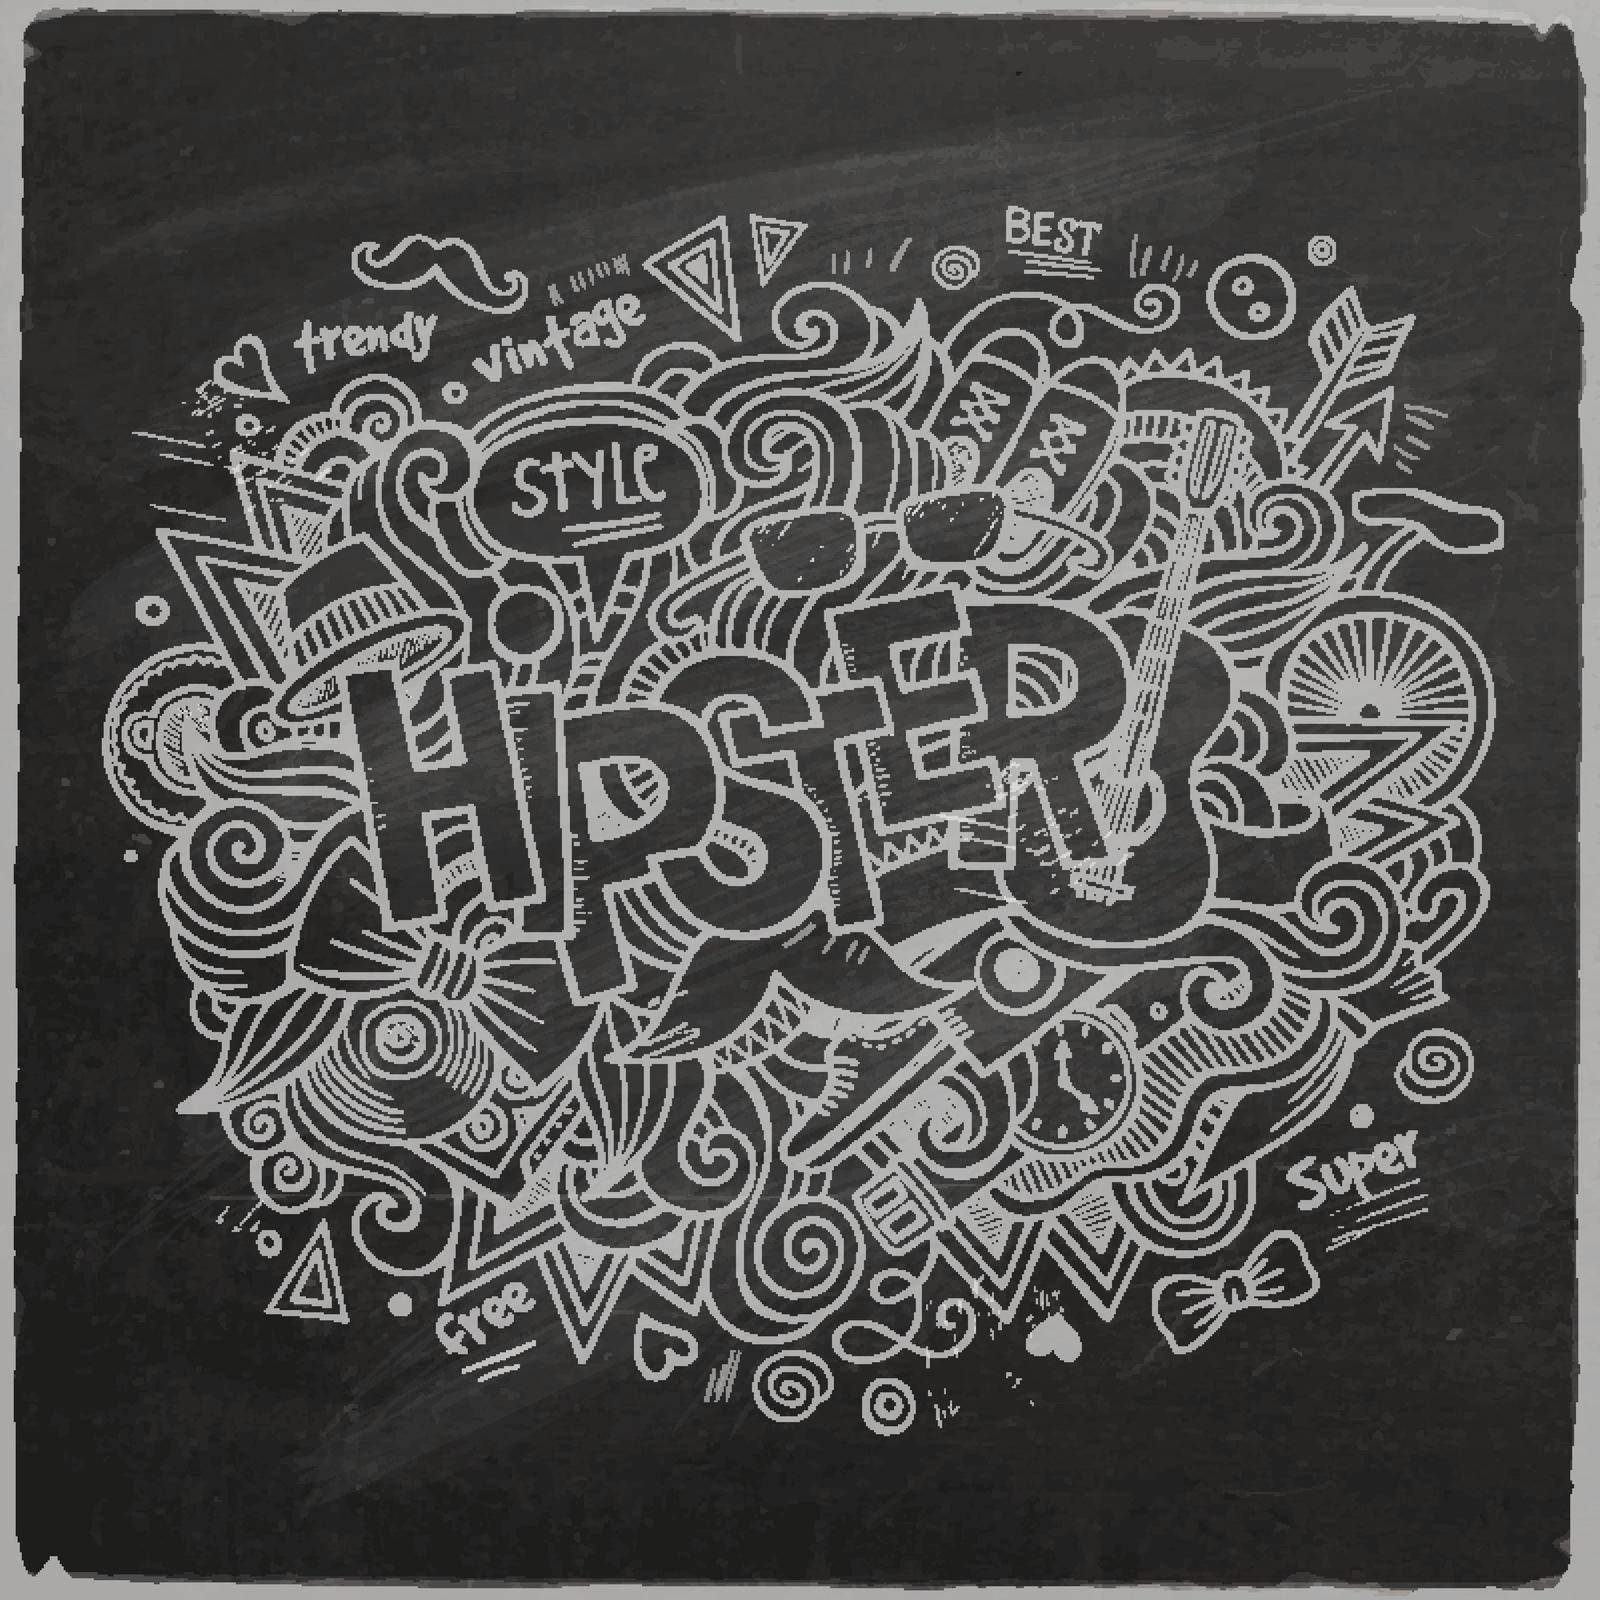 Hipster Vector hand lettering and doodles elements chalkboard background